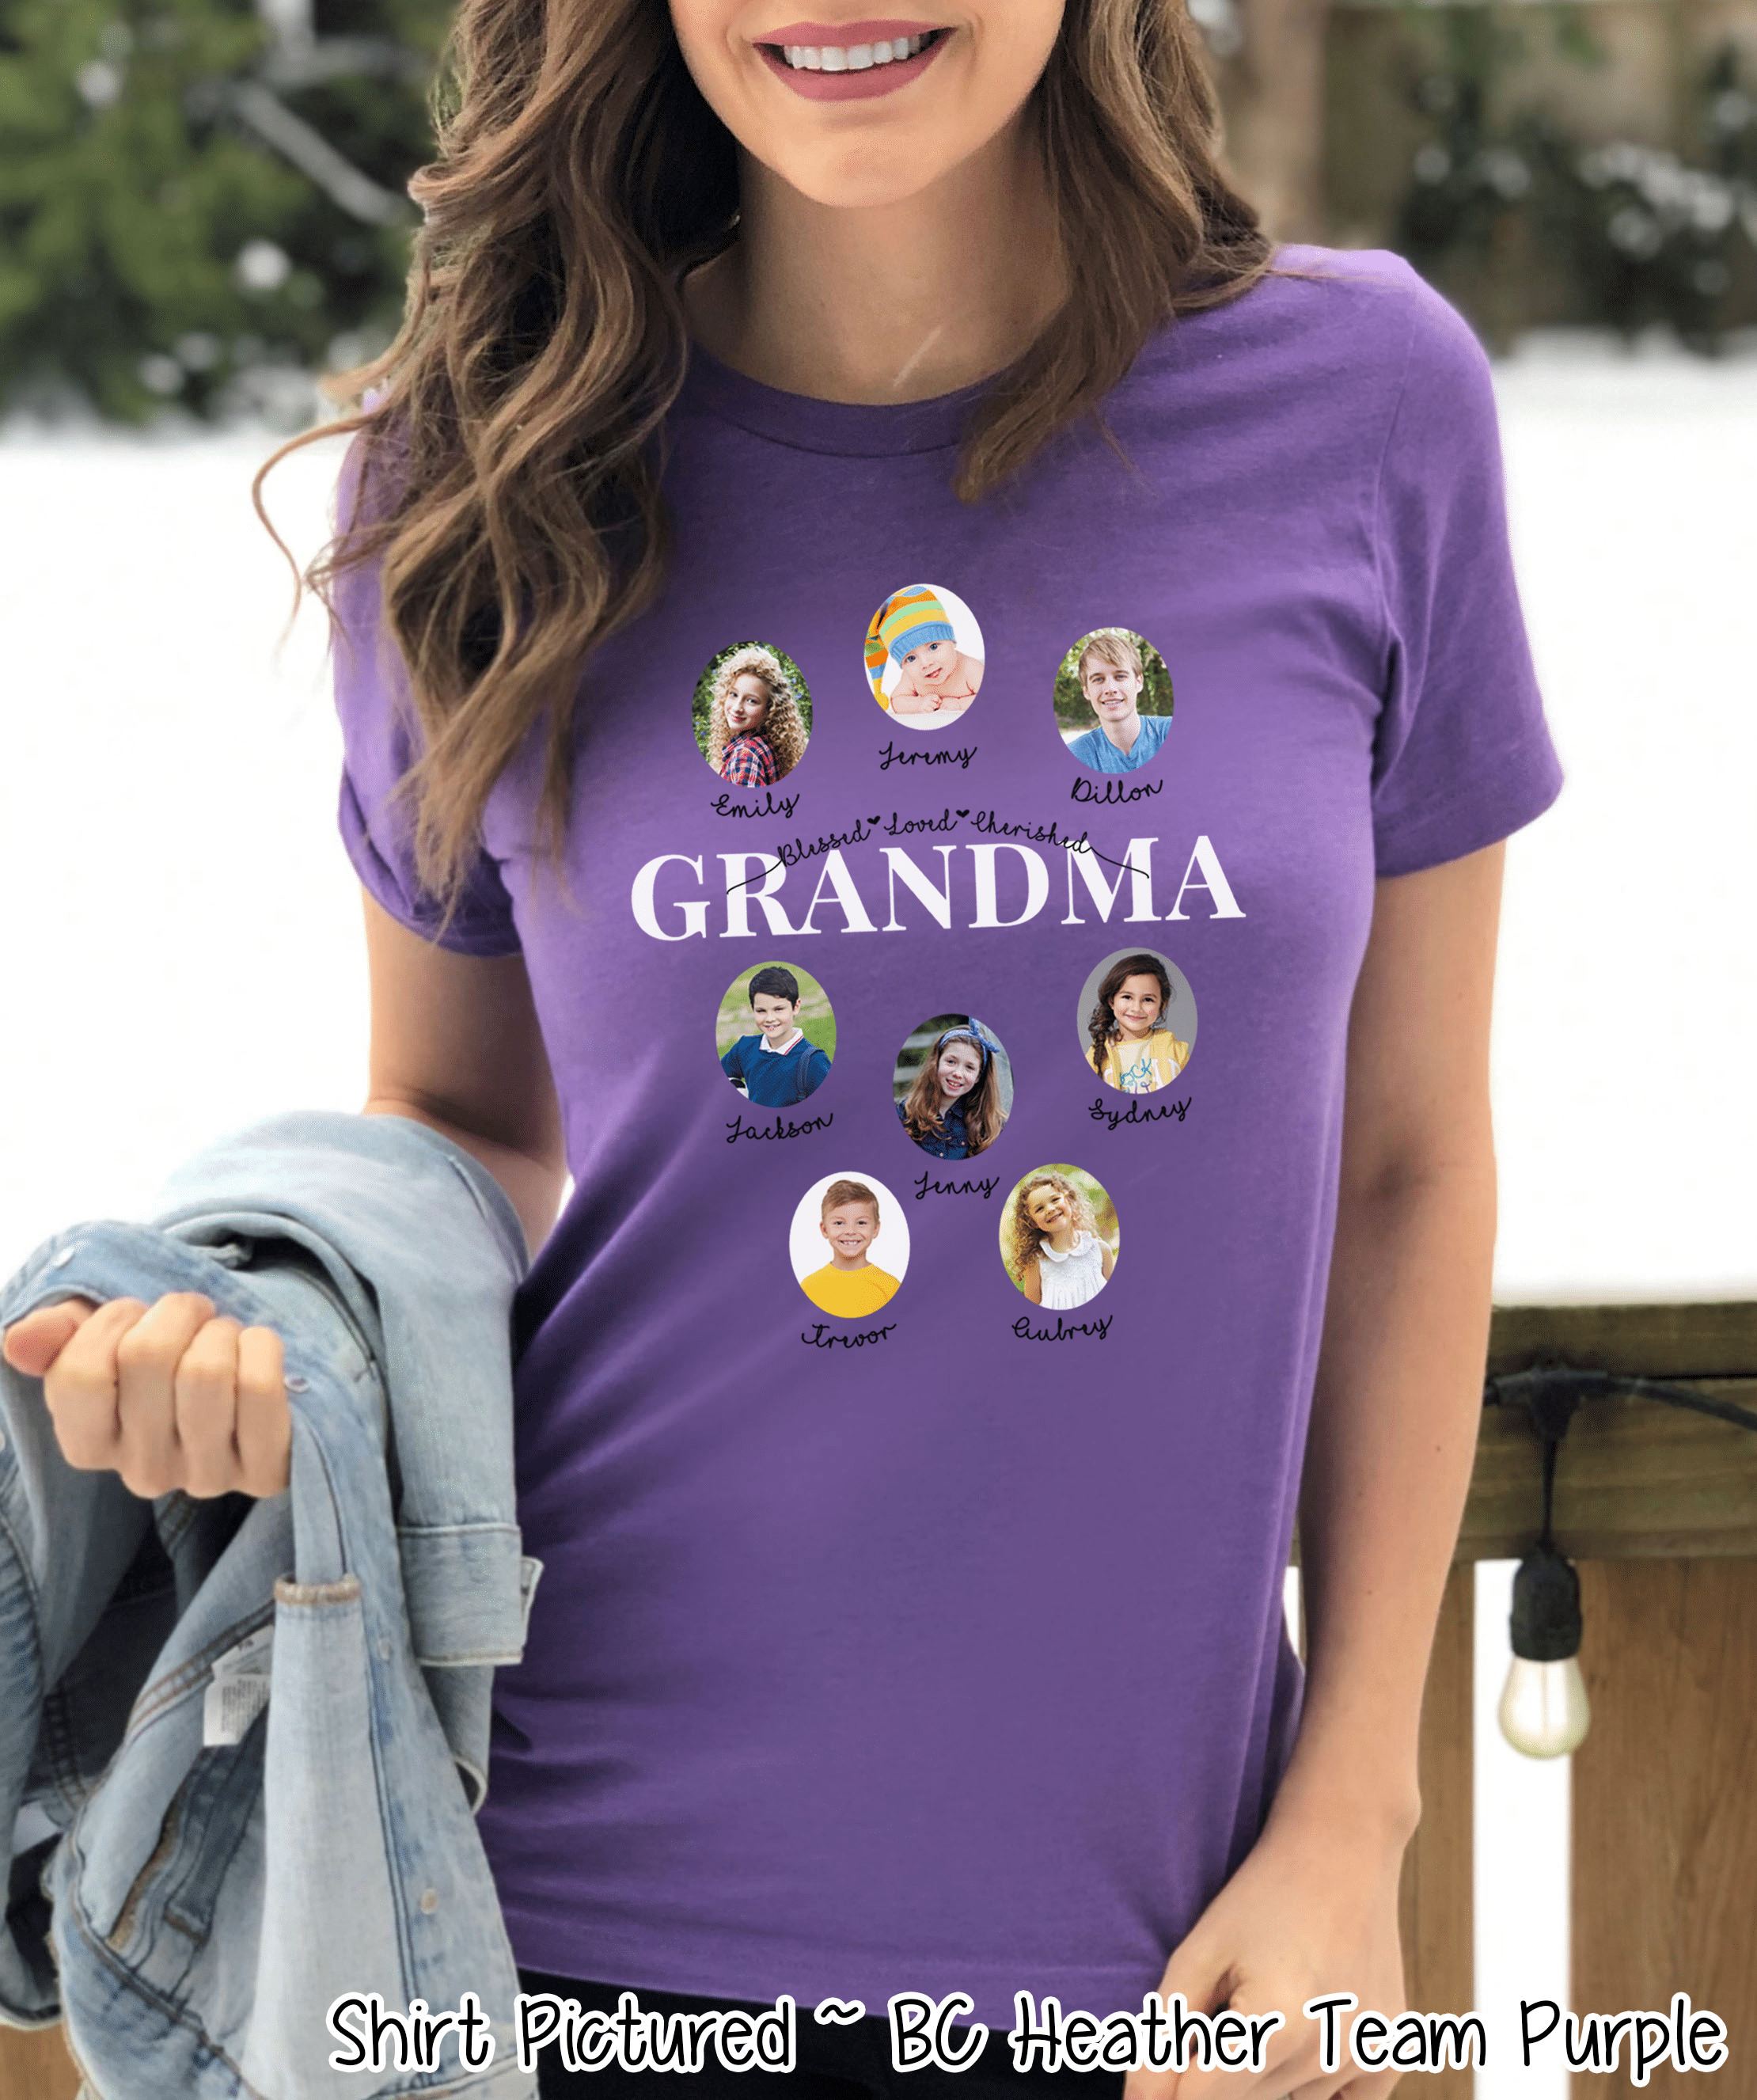 Personalized Grandma Photo Shirt ~ Individual Grandkids Photos & Names